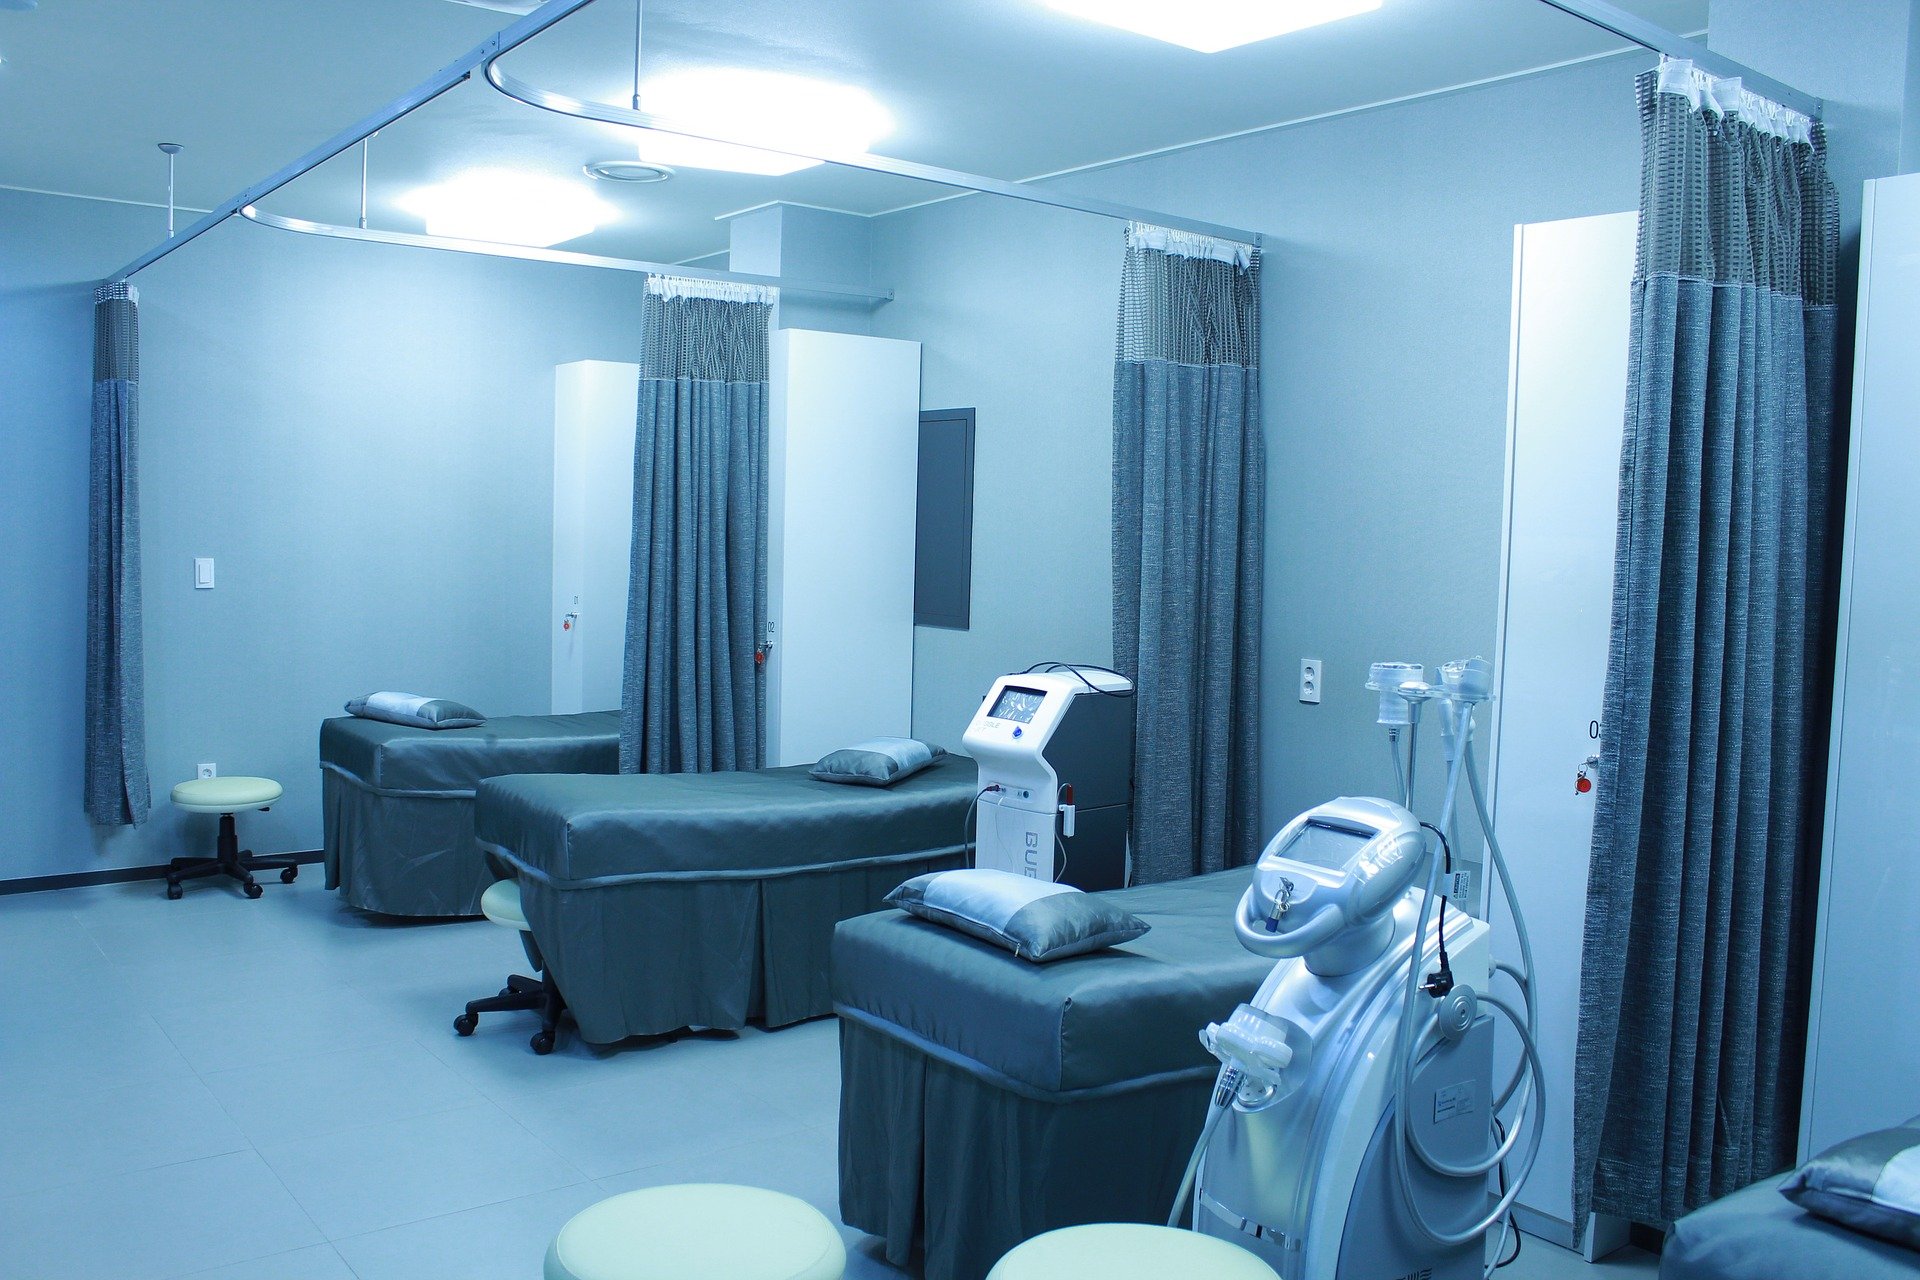 Germany: Closure of hospitals and nursing shortage